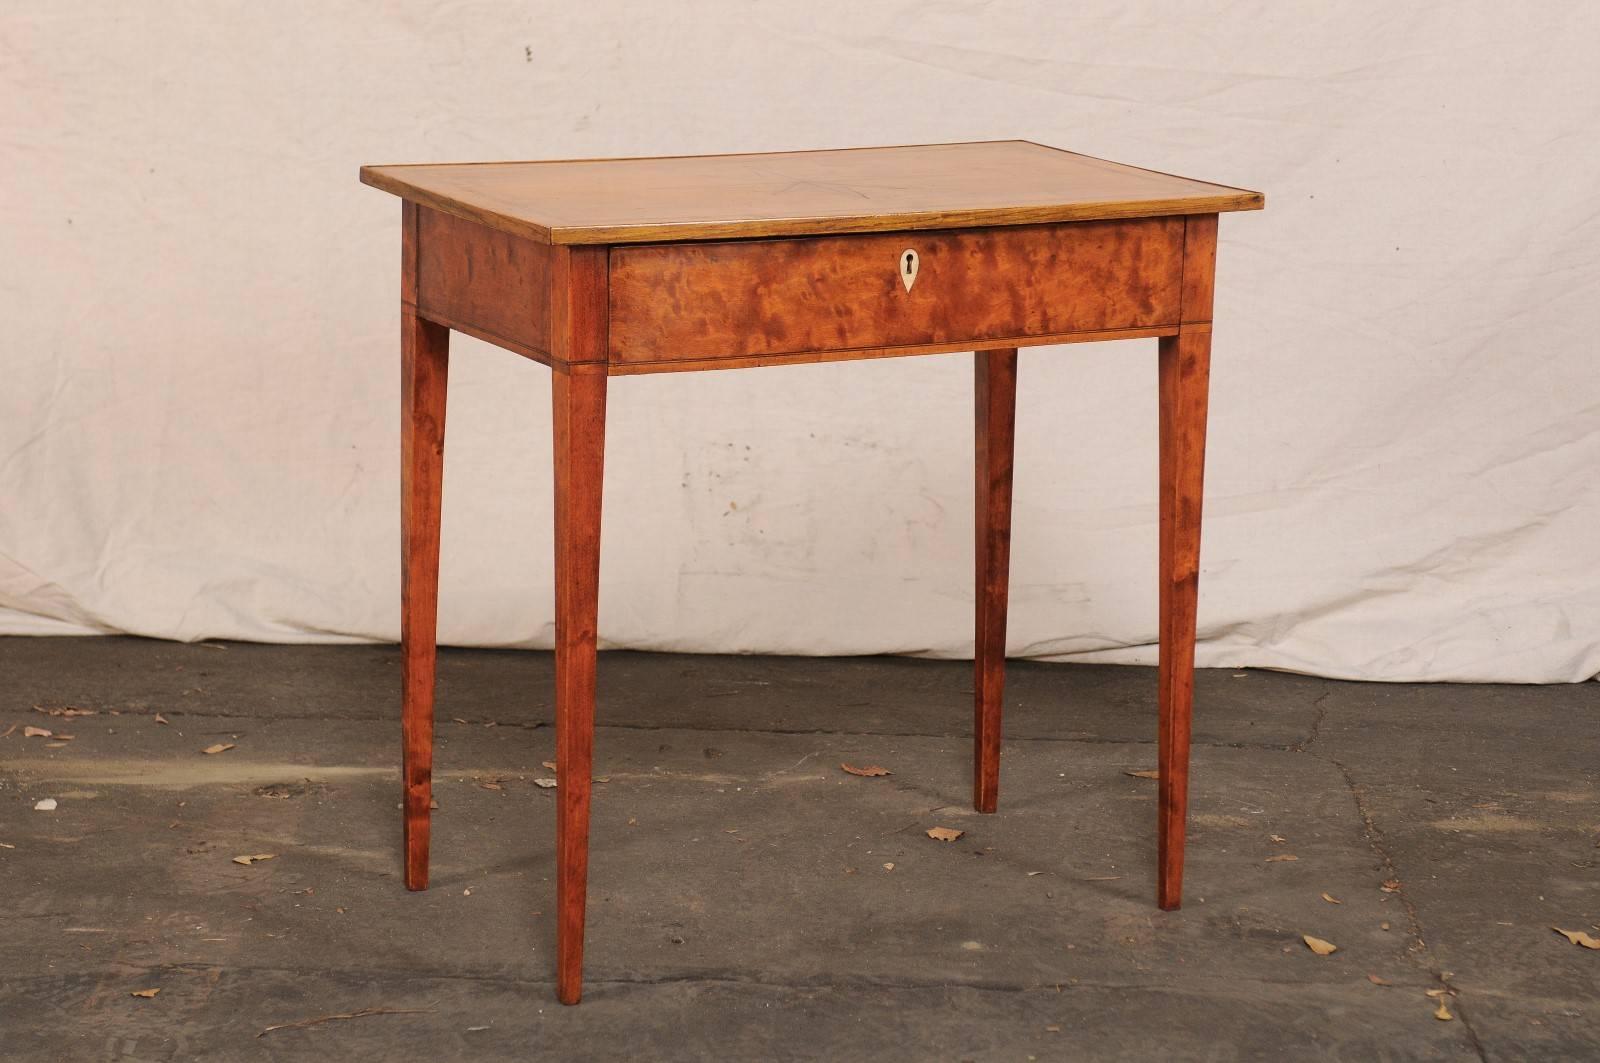 19th century Austrian Biedermeier inlaid work table with one drawer.